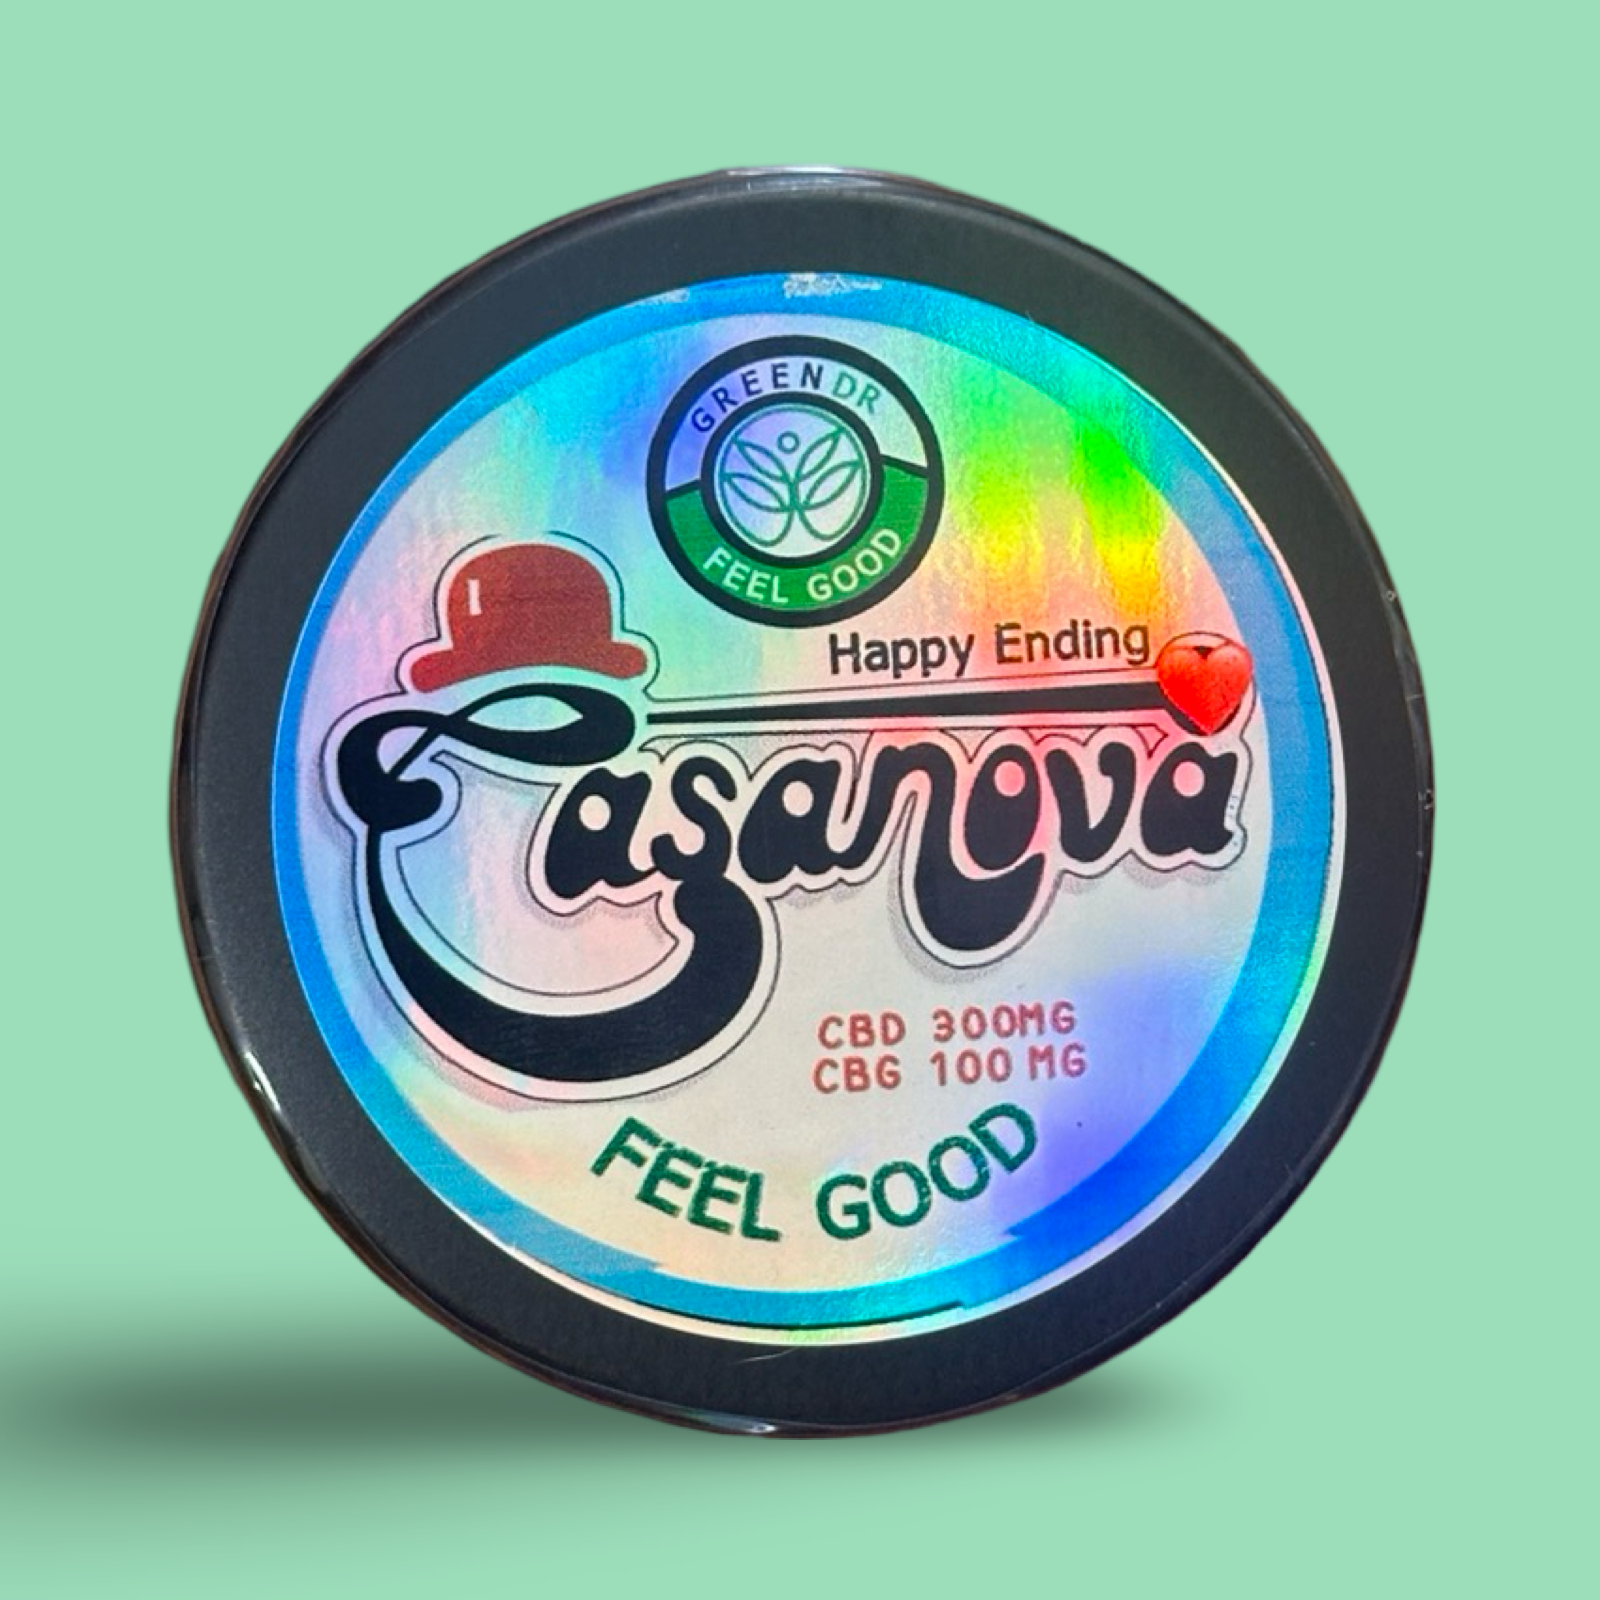 Casanova Gummy / We launched CBD Sex Gummies - The Original Green DR CBD